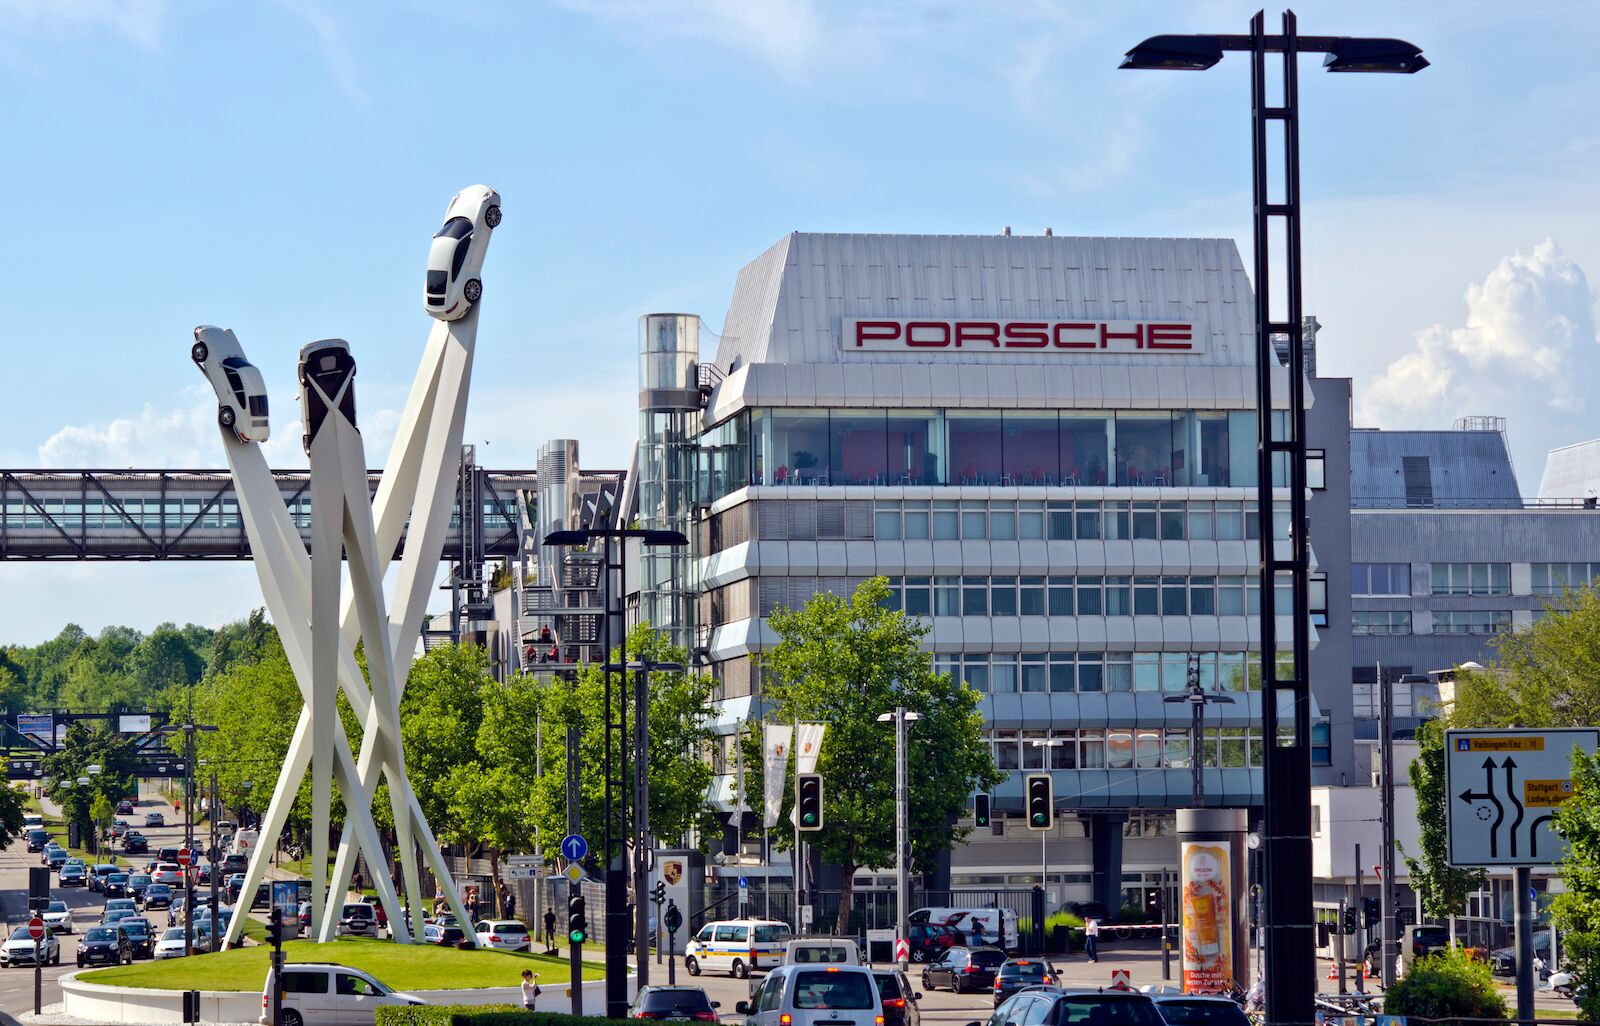 STUTTGART- ZUFFENHAUSEN, GERMANY - JULY 6, 2017: Porscheplatz, where is located a futuristic sculpture composed of three iconic generations of the Porsche 911 model, in front of Porsche Factory.